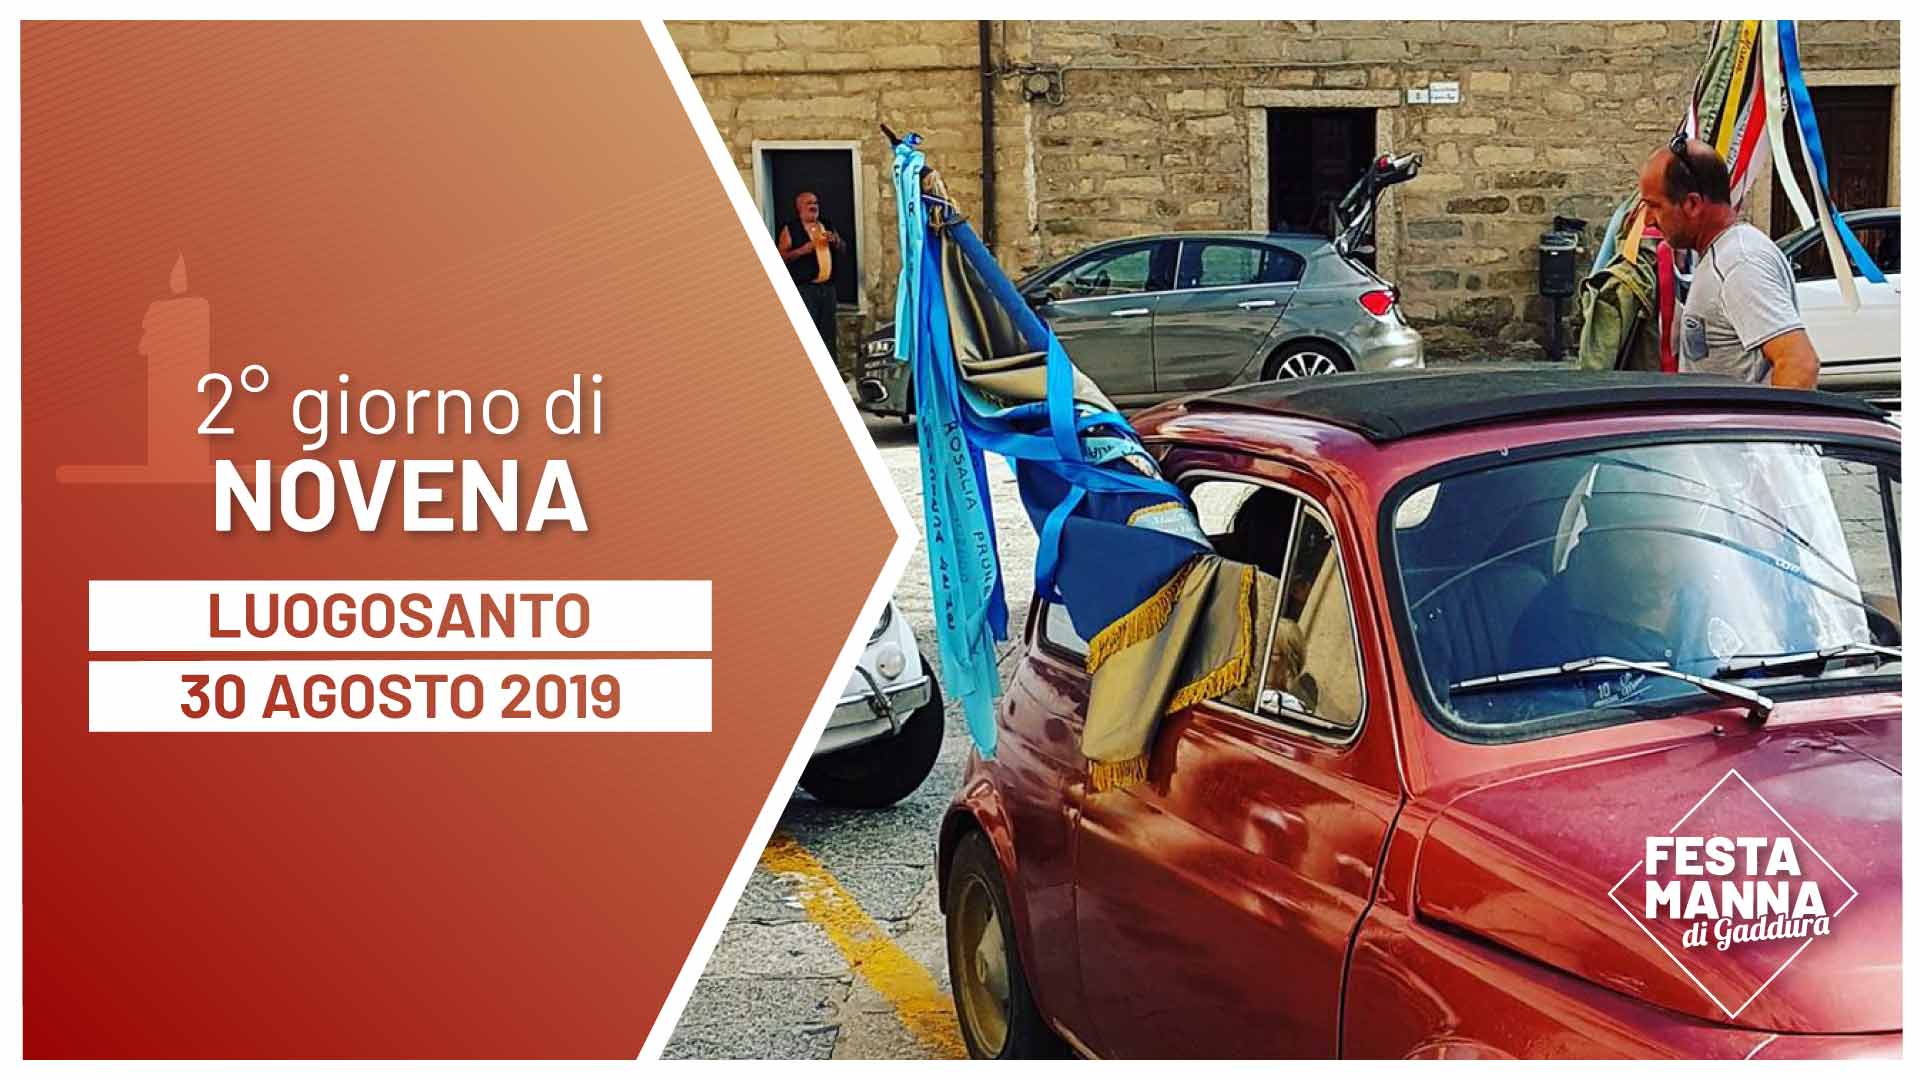 Second day of the novena | Festa Manna di Gaddura 2019